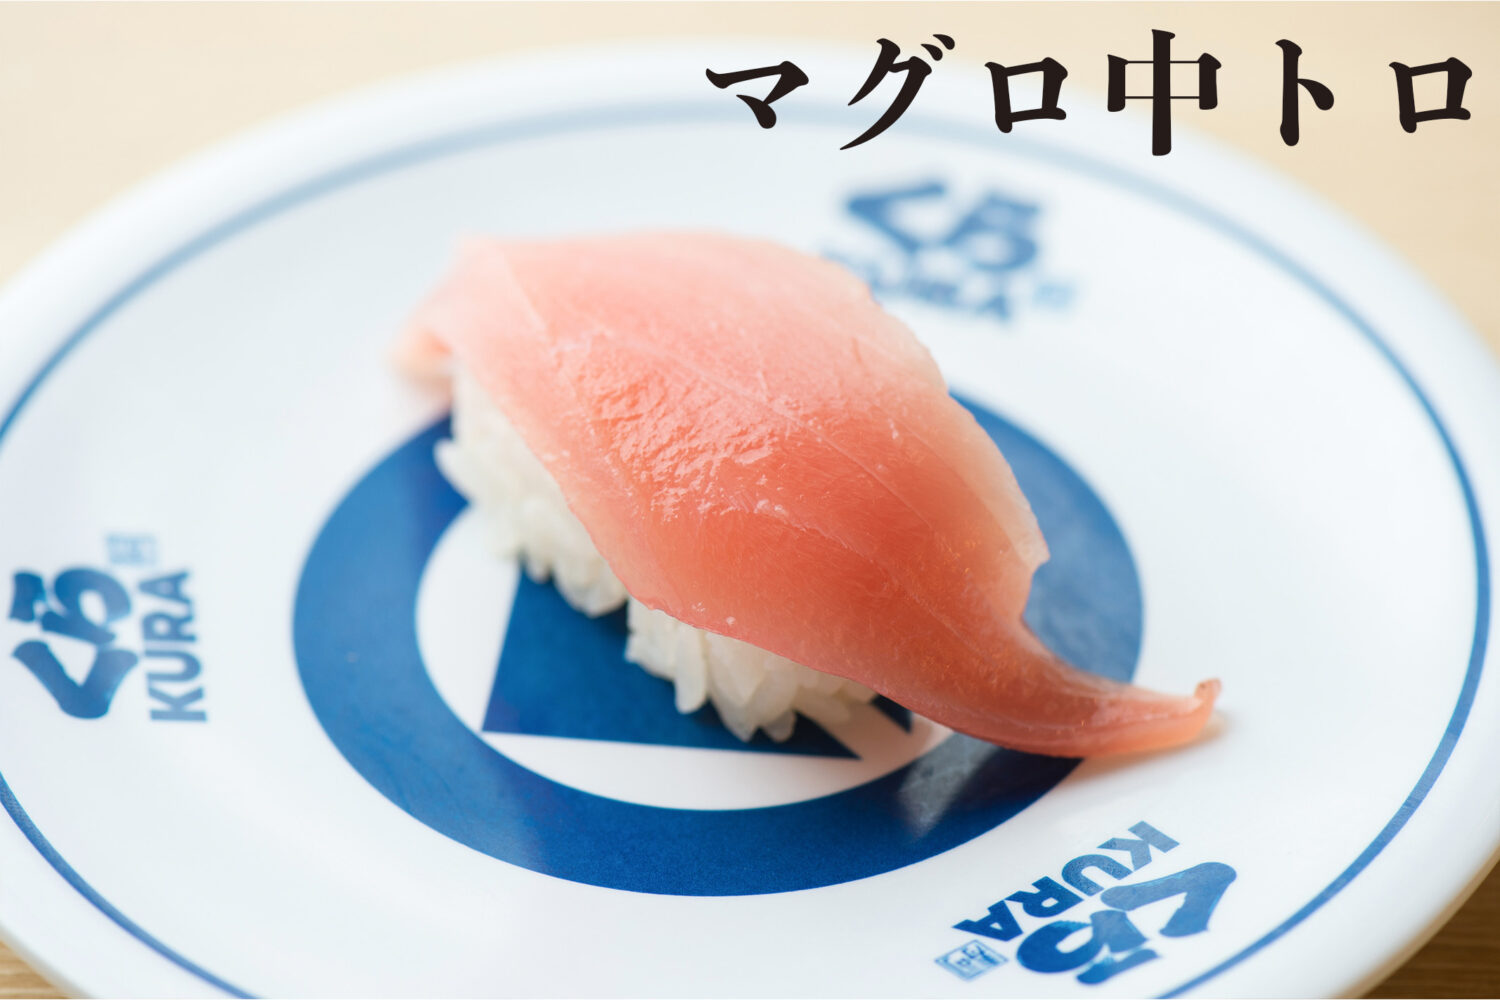 medium fatty tuna　マグロ中トロ　chu-toro